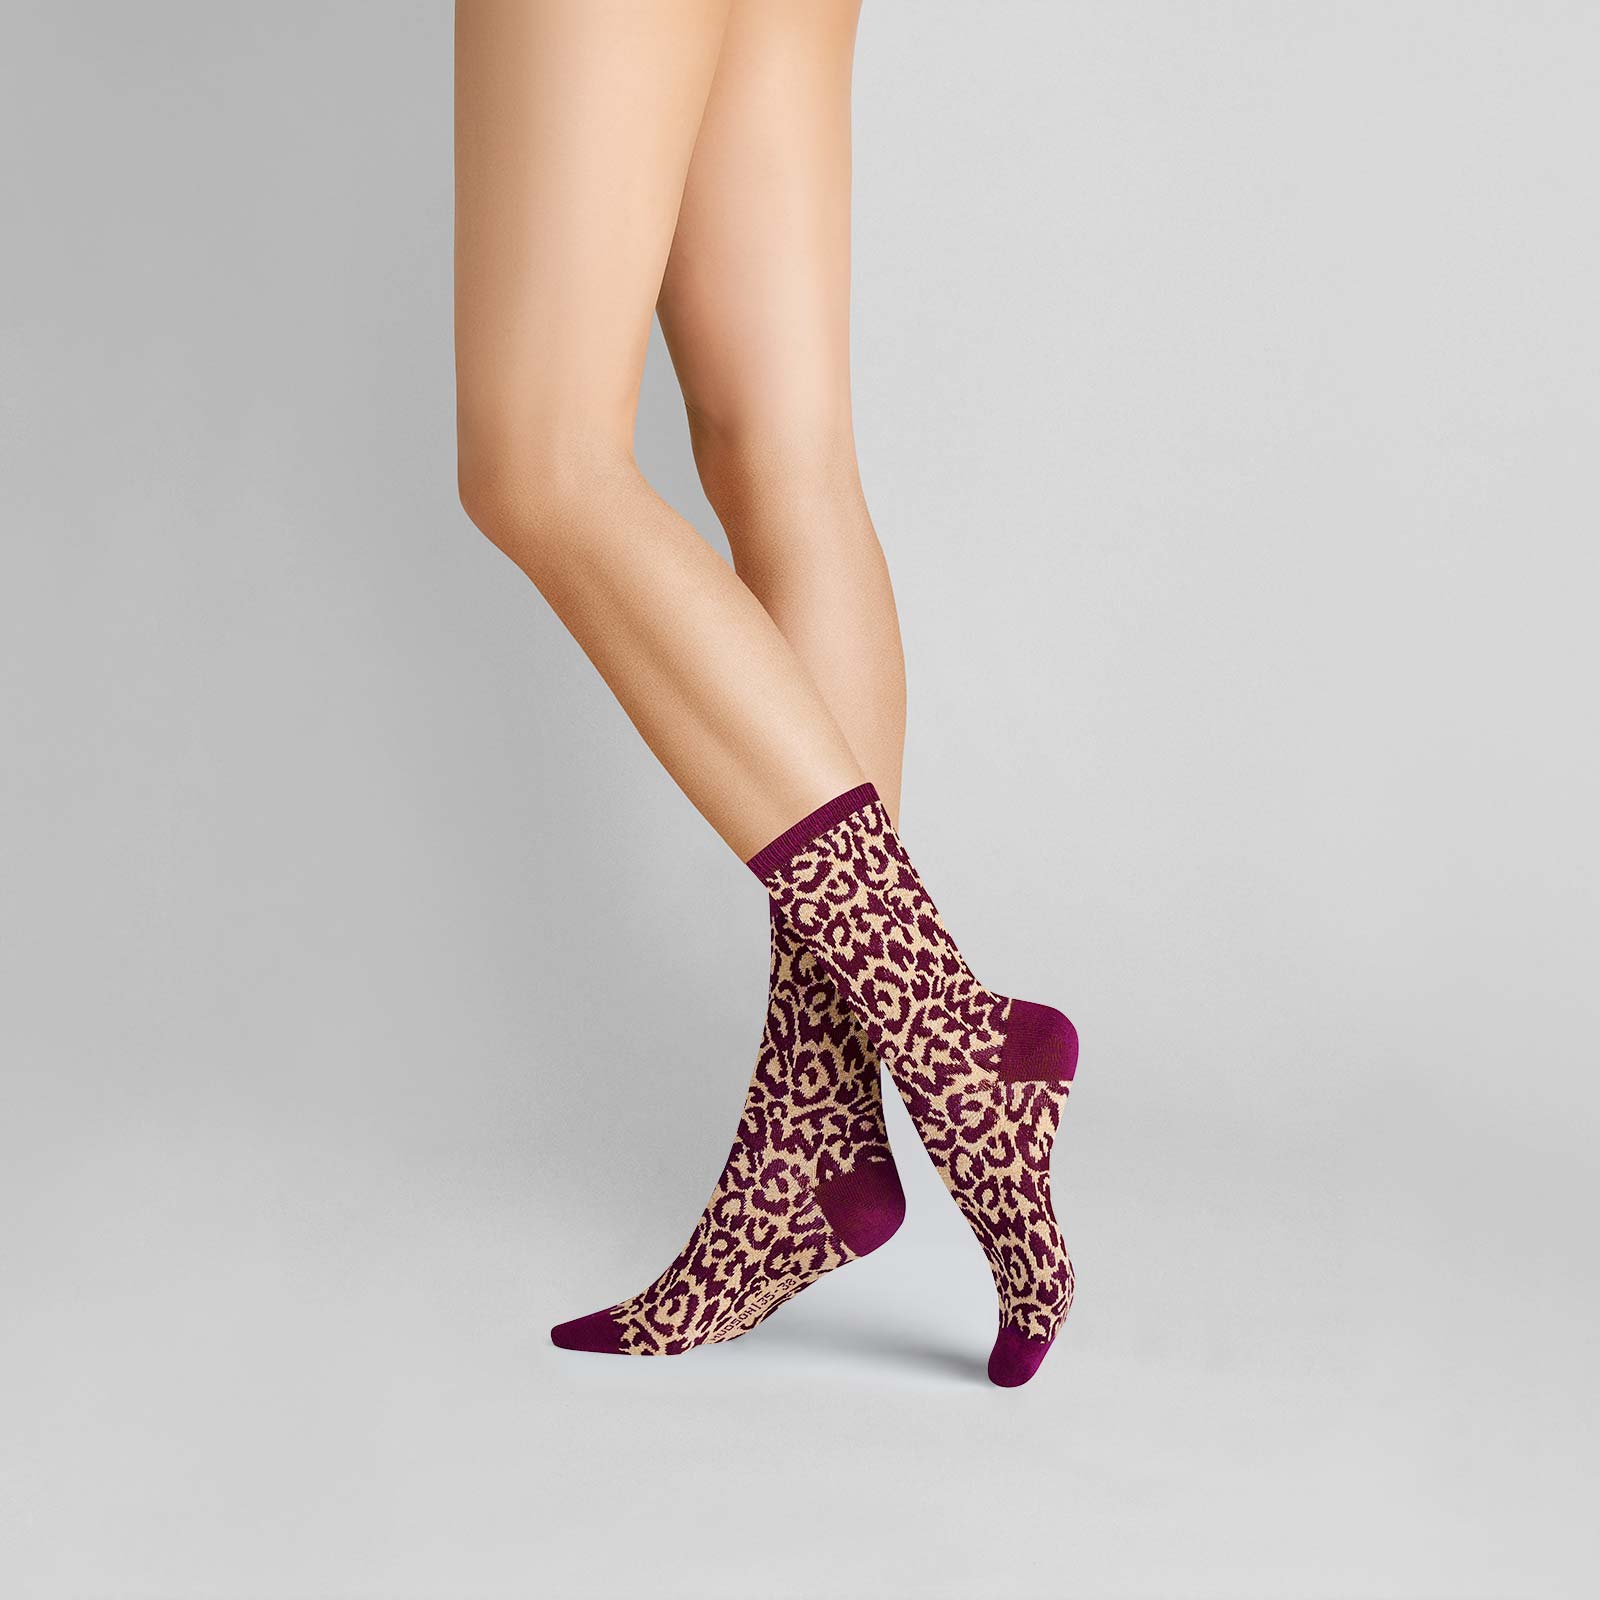 HUDSON Damen LEOPARD -  35/38 - Damen Socken mit modernem Leo-Muster - Sweet lilac (Pink/Violett)